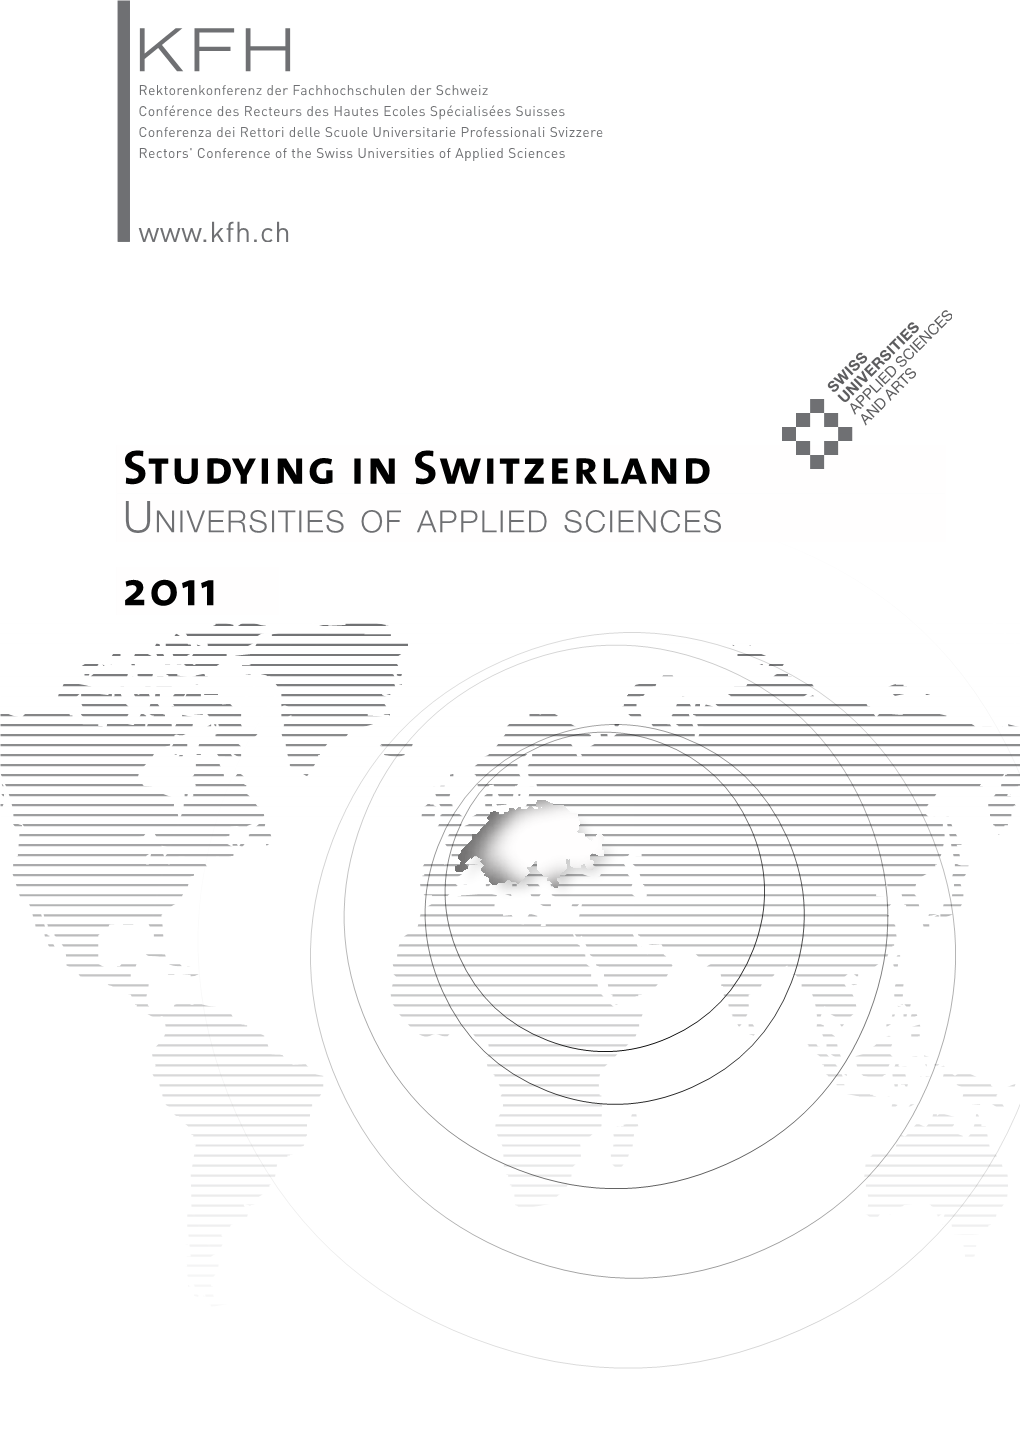 Studying in Switzerland 2011